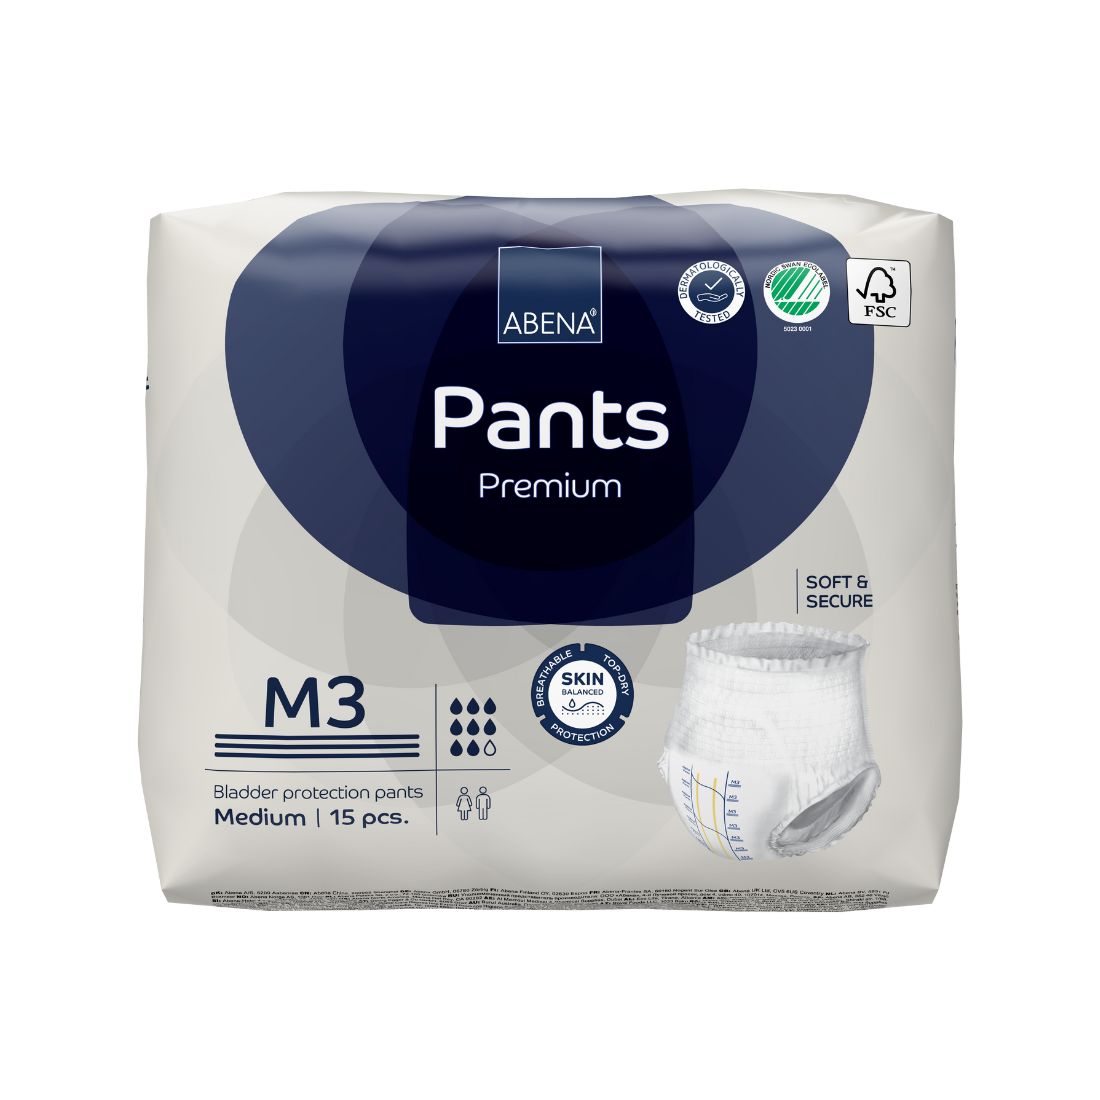 Abena Pants Premium 3, Windelhose